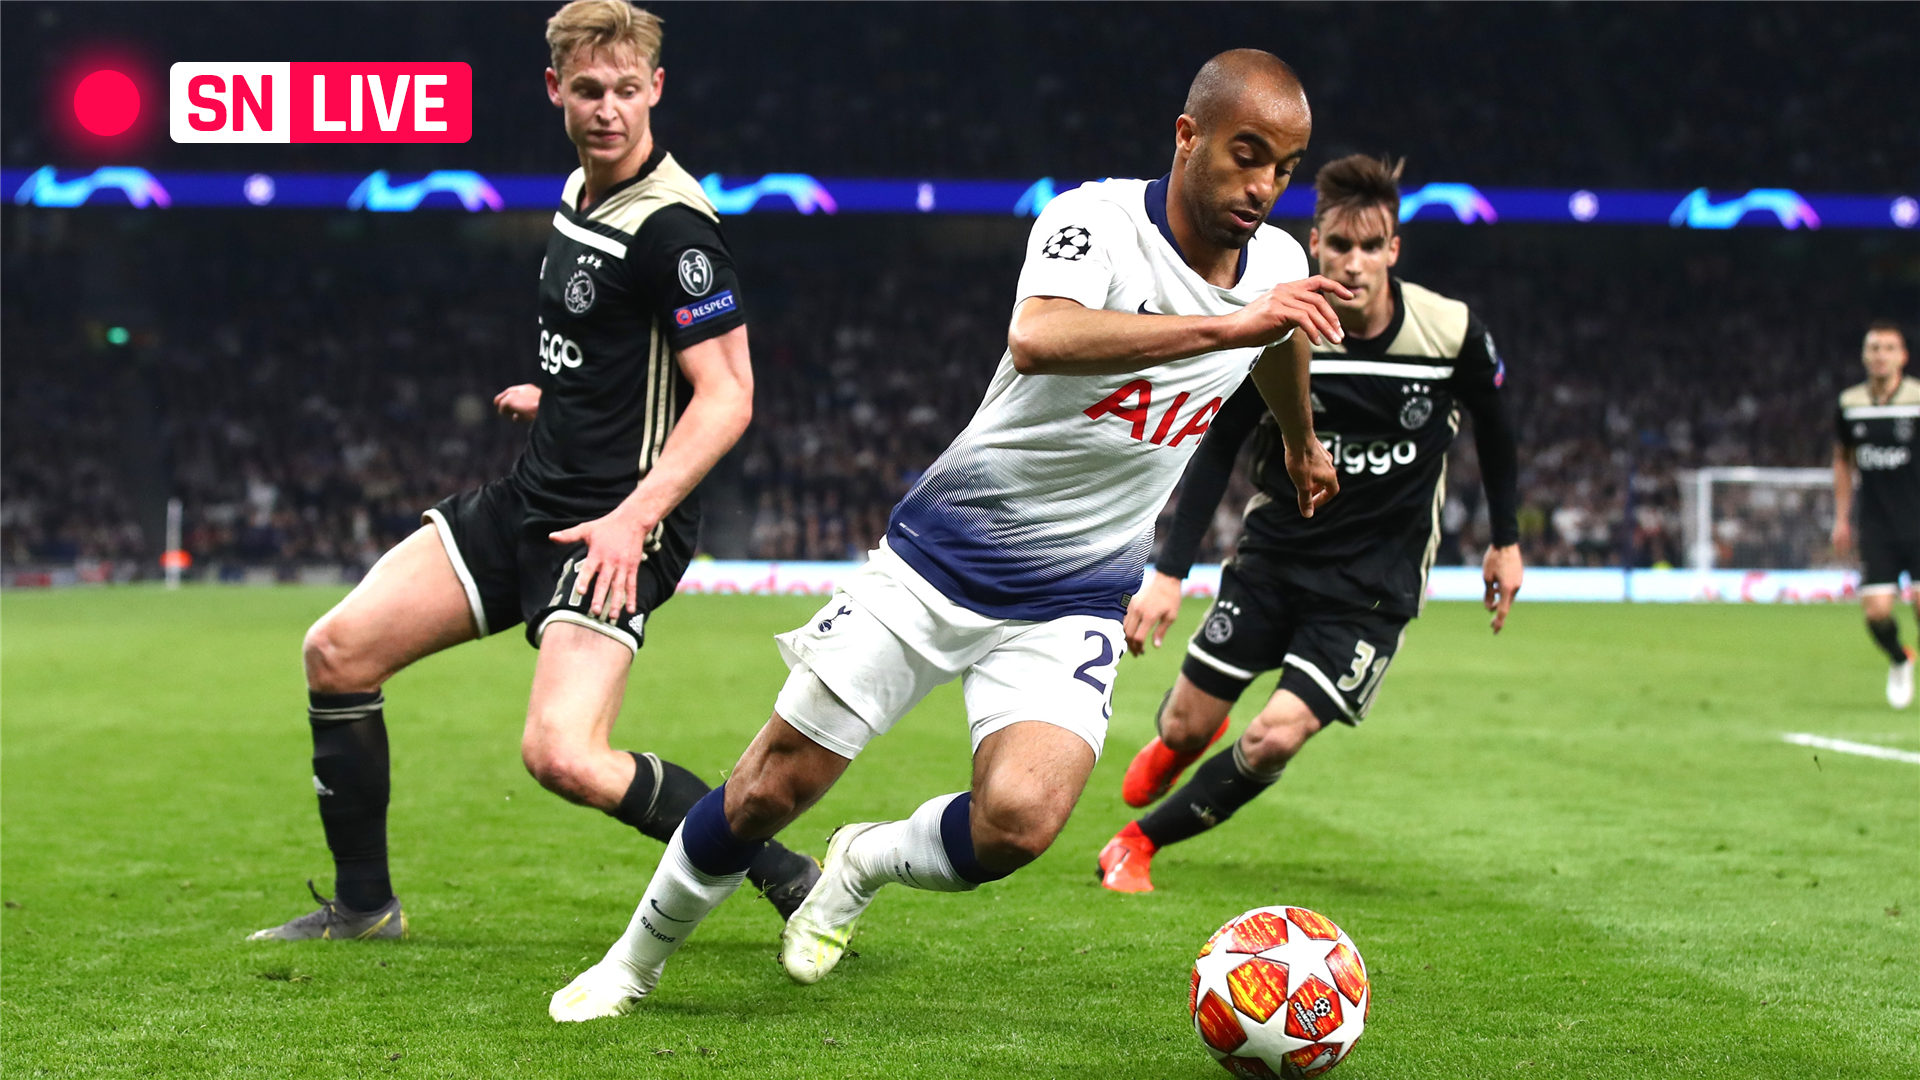 Ajax Vs Tottenham Live Score Updates Highlights From 2019 Champions